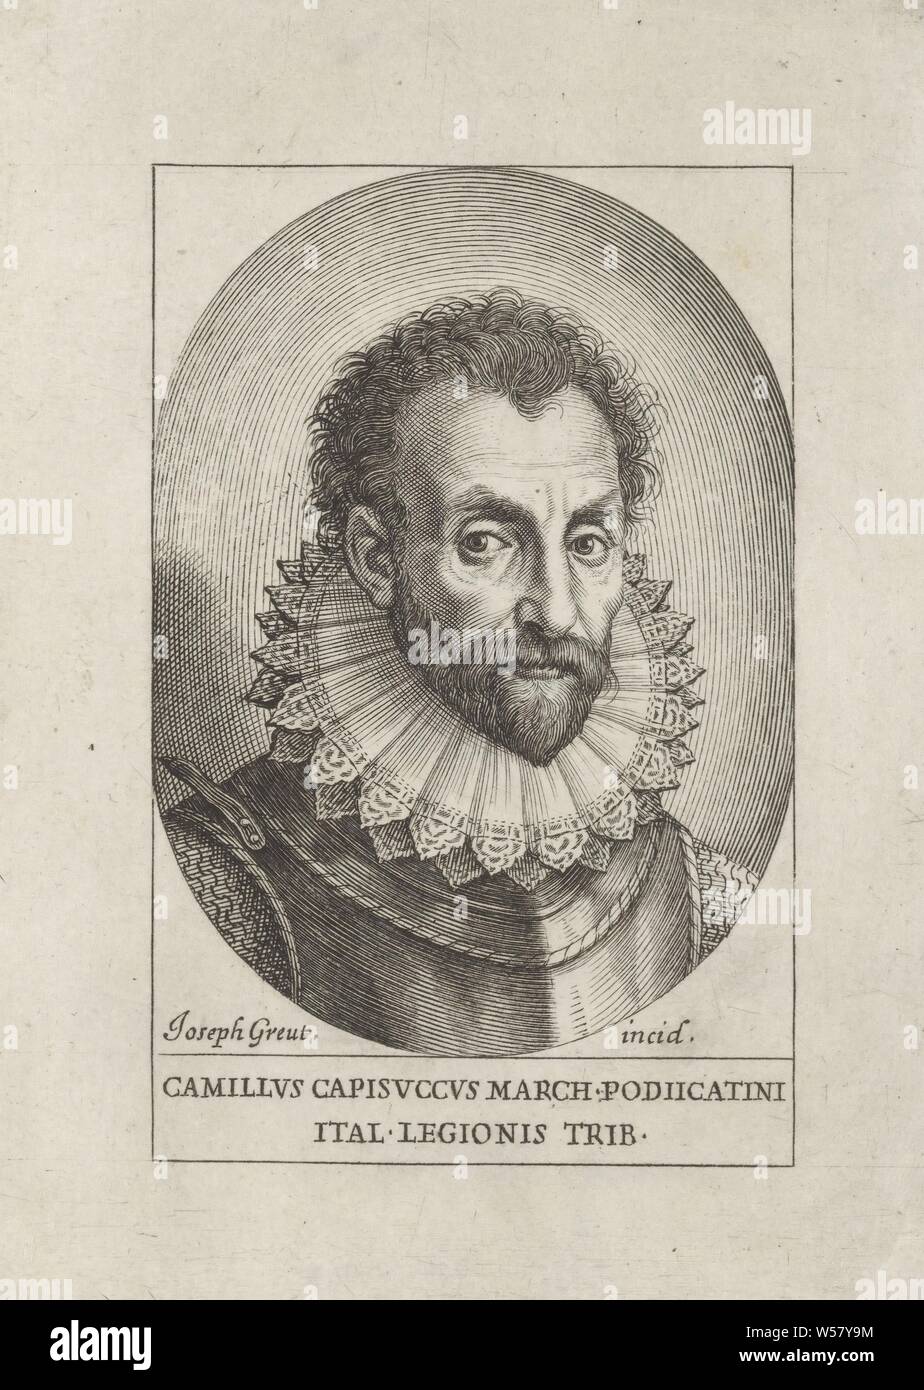 Portrait von Camillo Capizucchi Portraits (Titel der Serie), historische Personen, Camillo Capizucchi, Joseph Greuter (auf Objekt erwähnt), Italien, C. 1650, Papier, Gravur, H 131 mm x B 95 mm Stockfoto